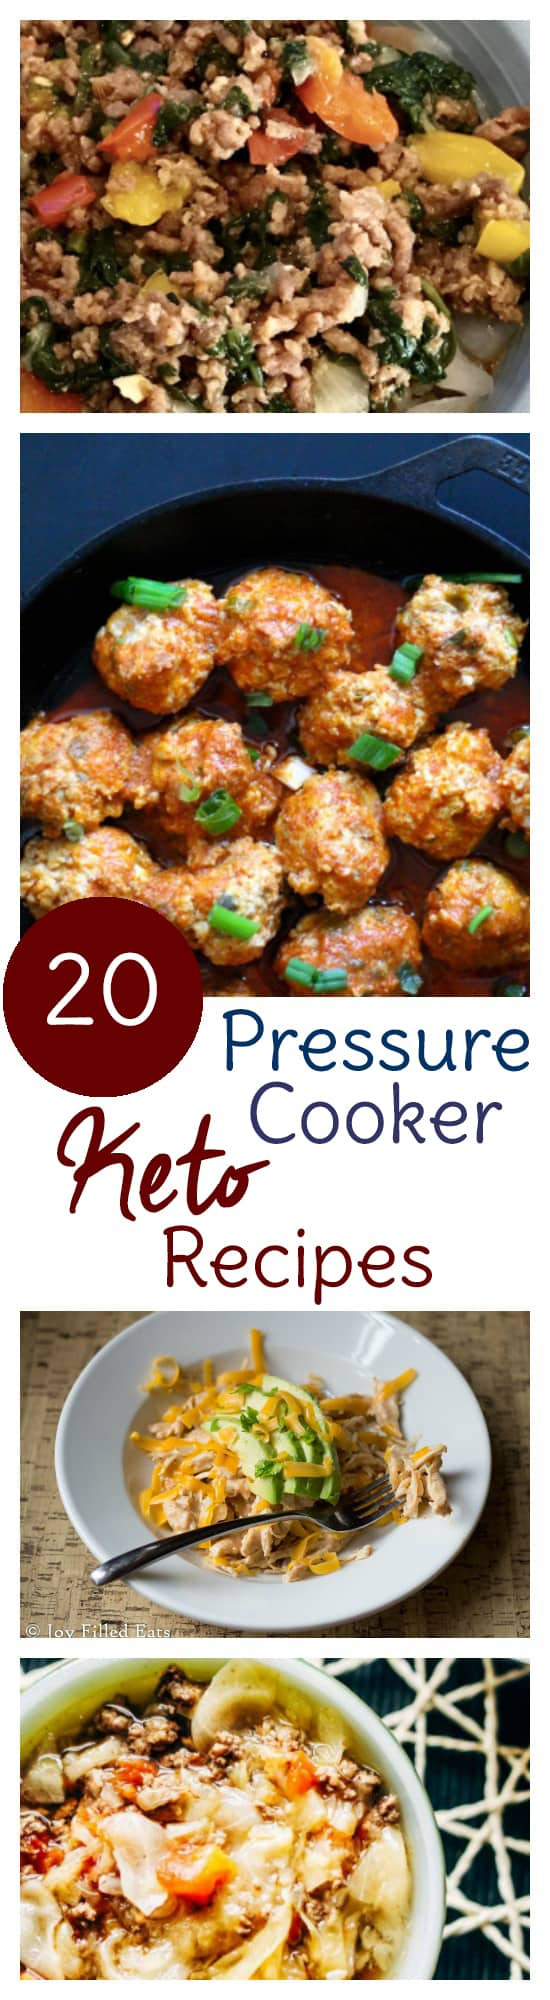 Low Fat Pressure Cooker Recipes
 20 Keto Pressure Cooker Recipes